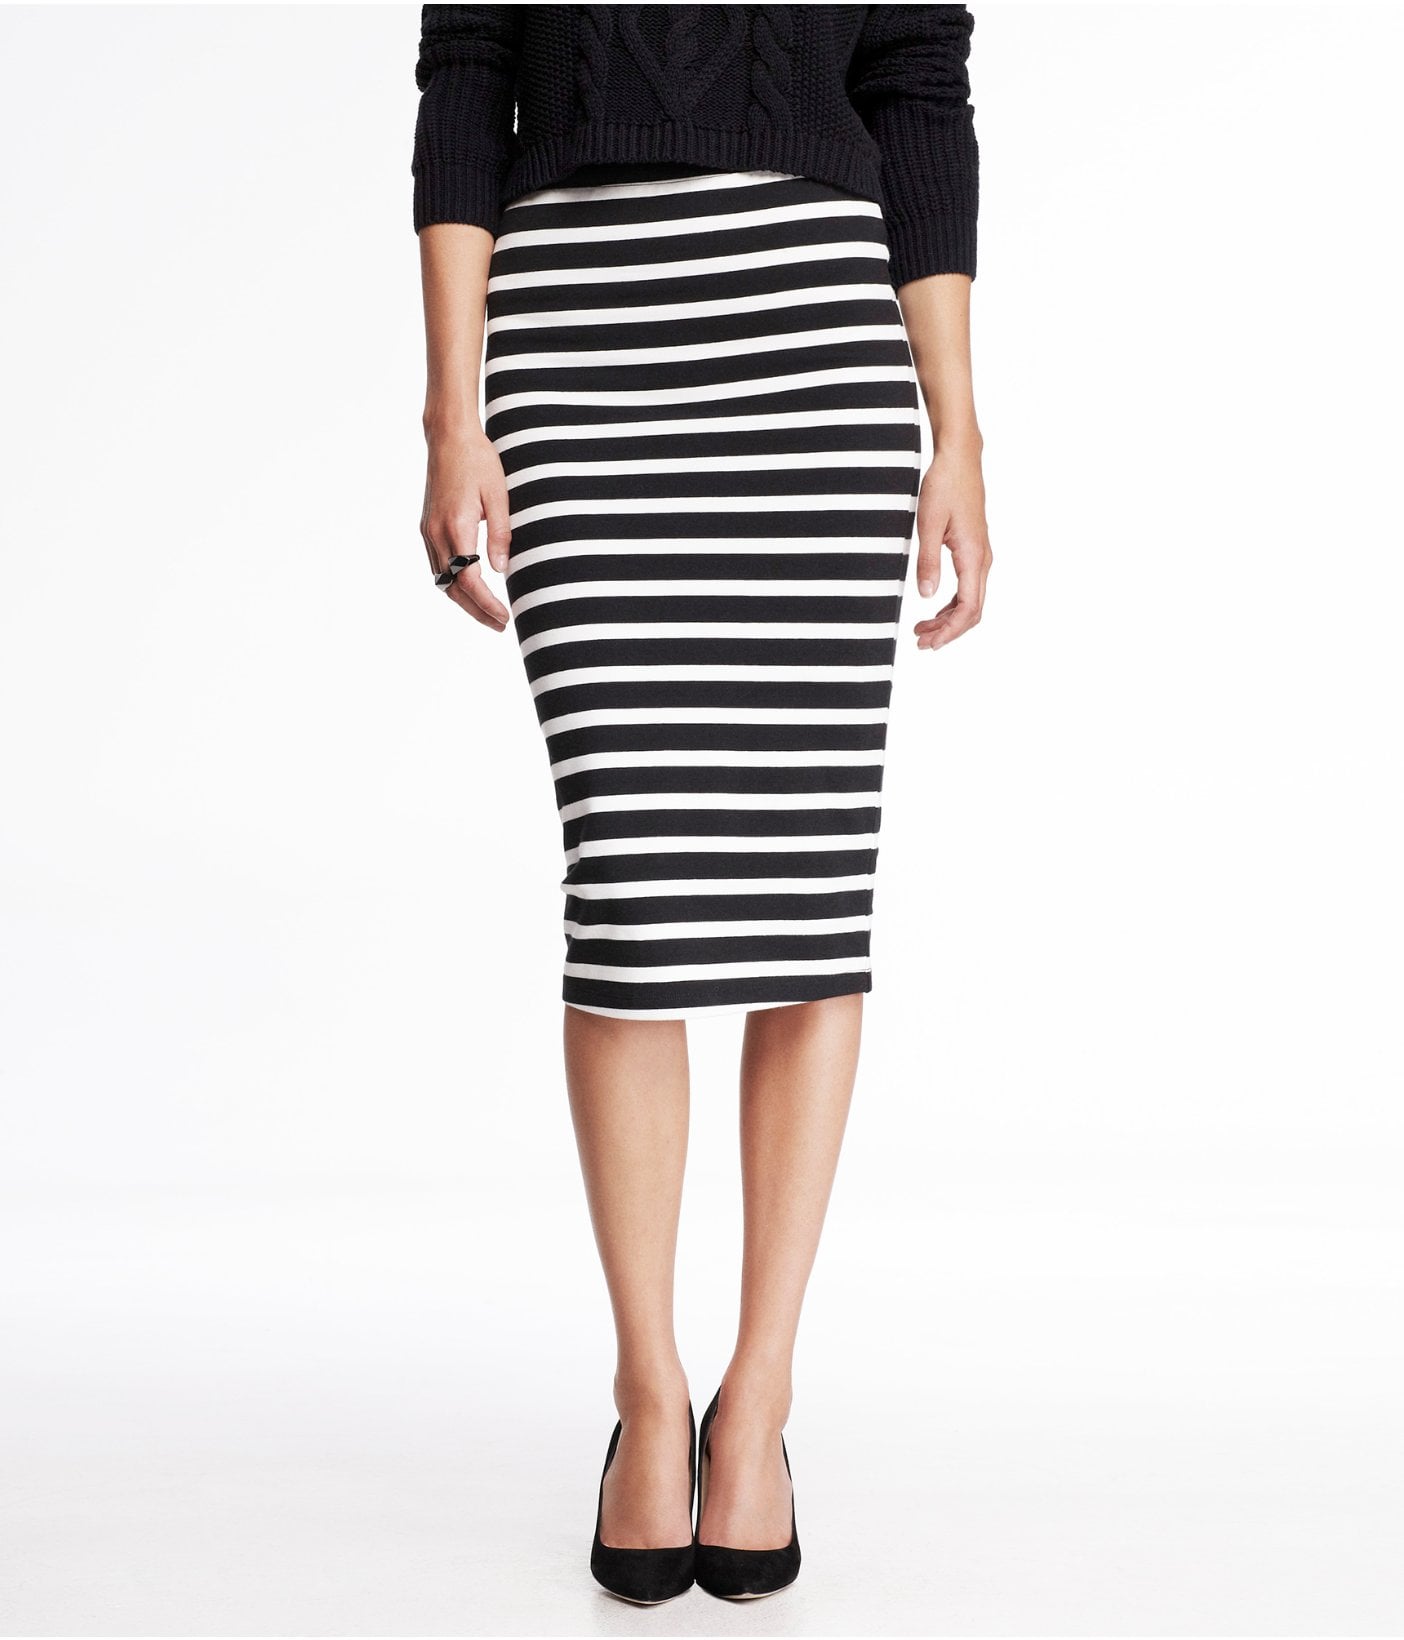 Express Striped Skirt | 50 Date-Night 